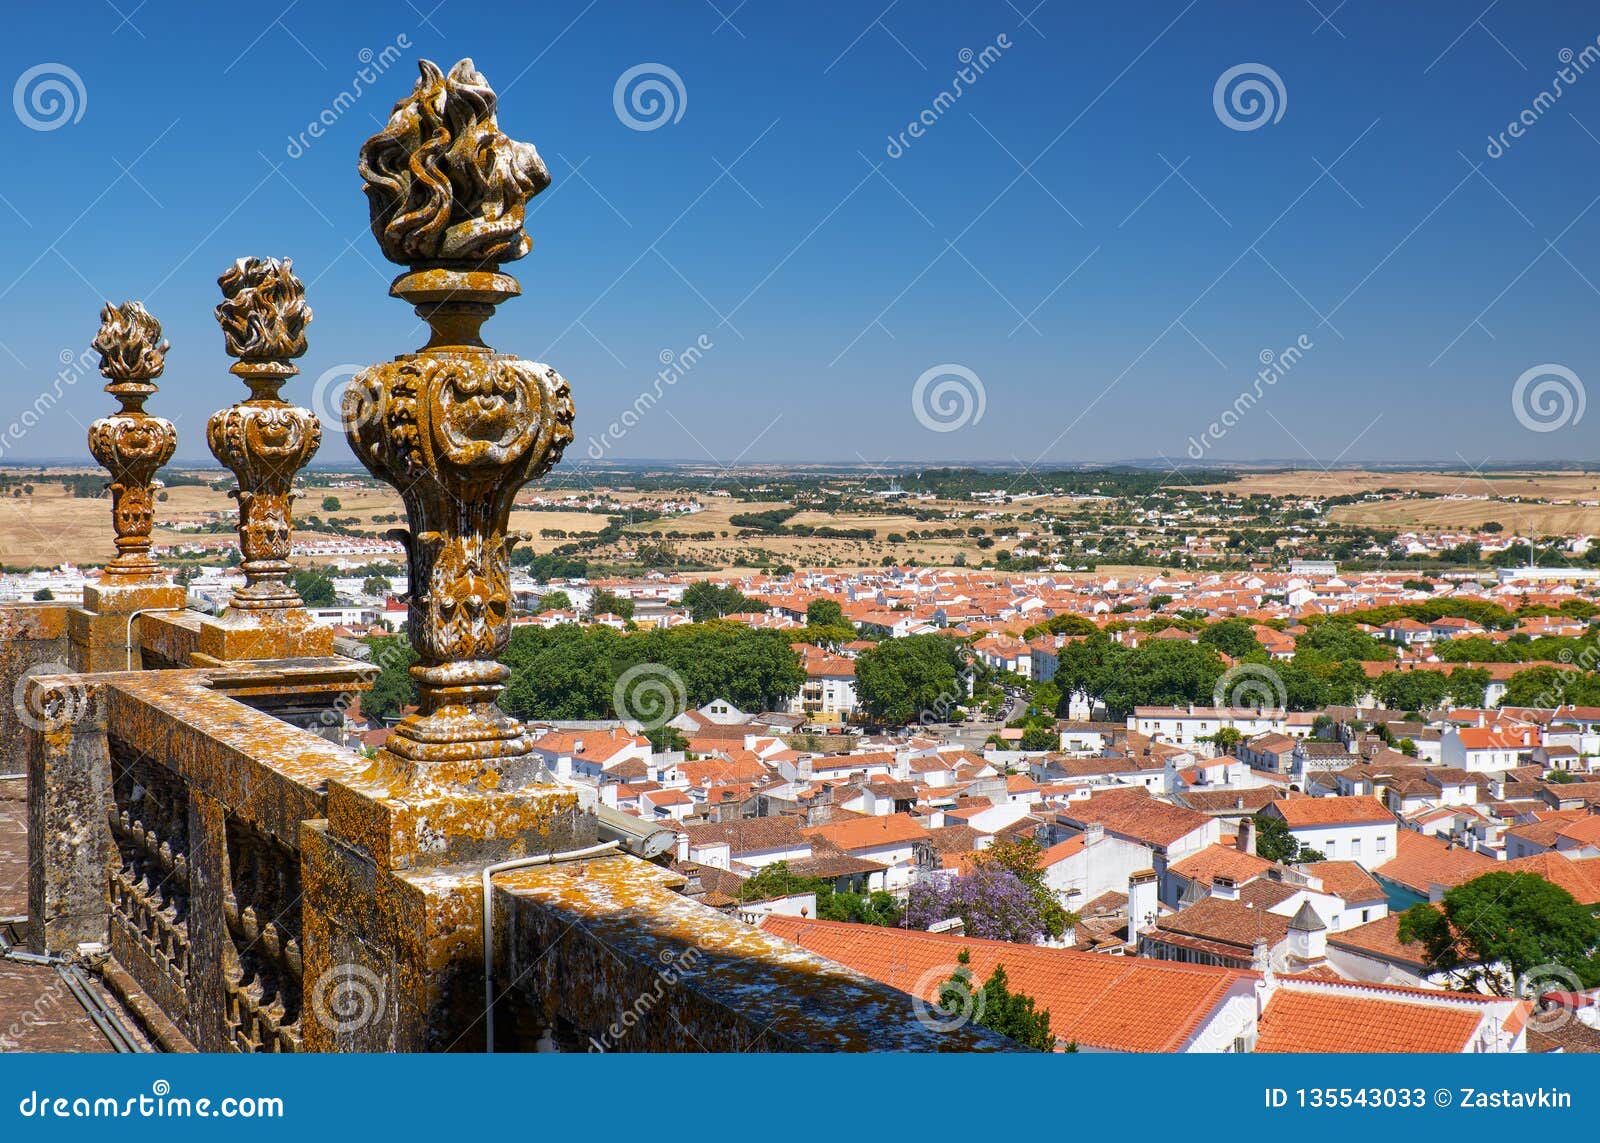 decorative stone torches on the balcony of evora cathedral (se). evora. portugal